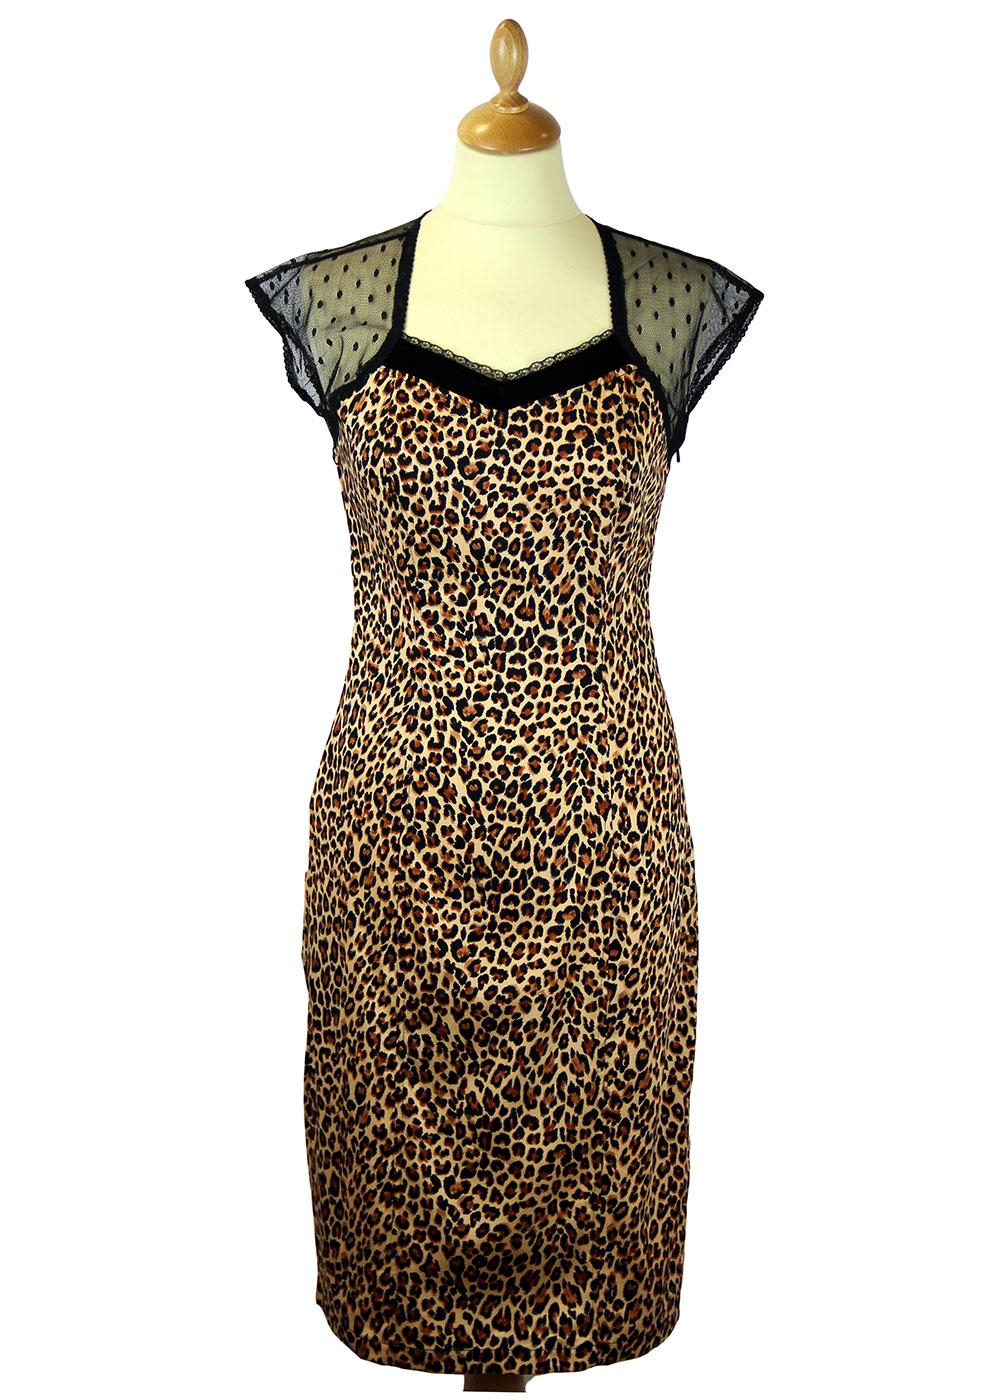 FRIDAY ON MY MIND Kitty Retro 60s Leopard Print Pencil Dress